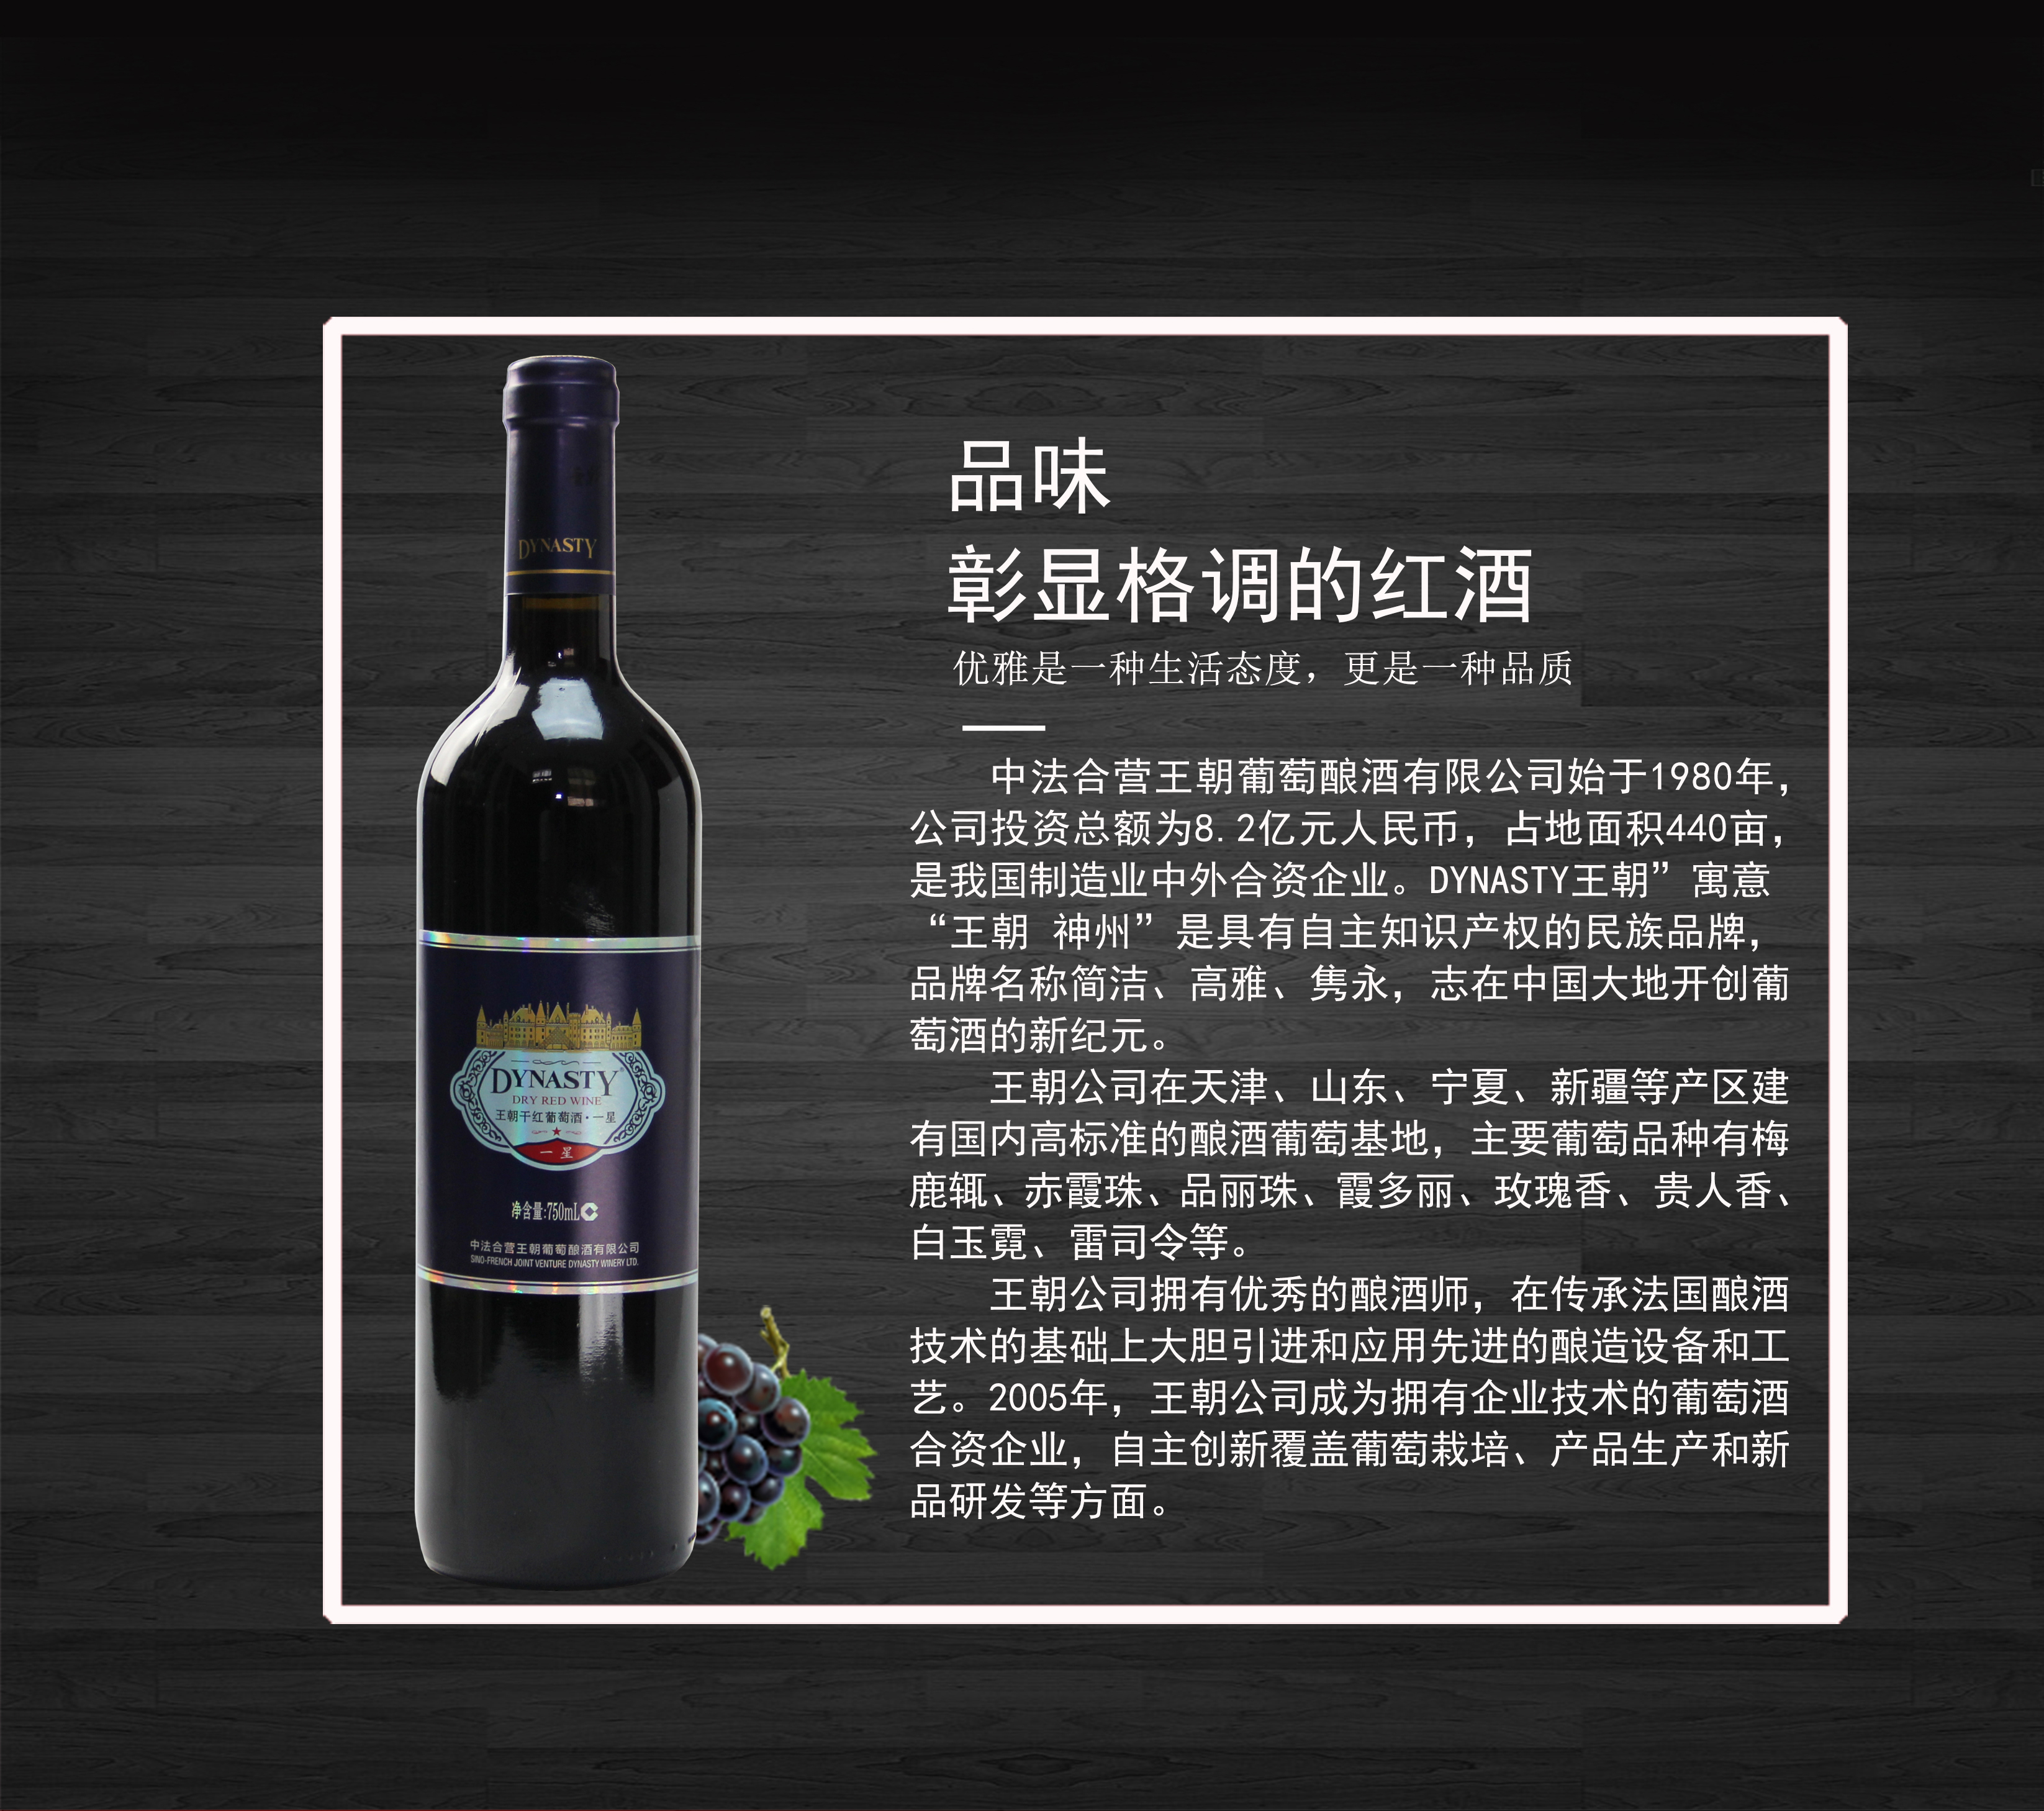 Dynasty王朝一星国产干红葡萄酒(图2)